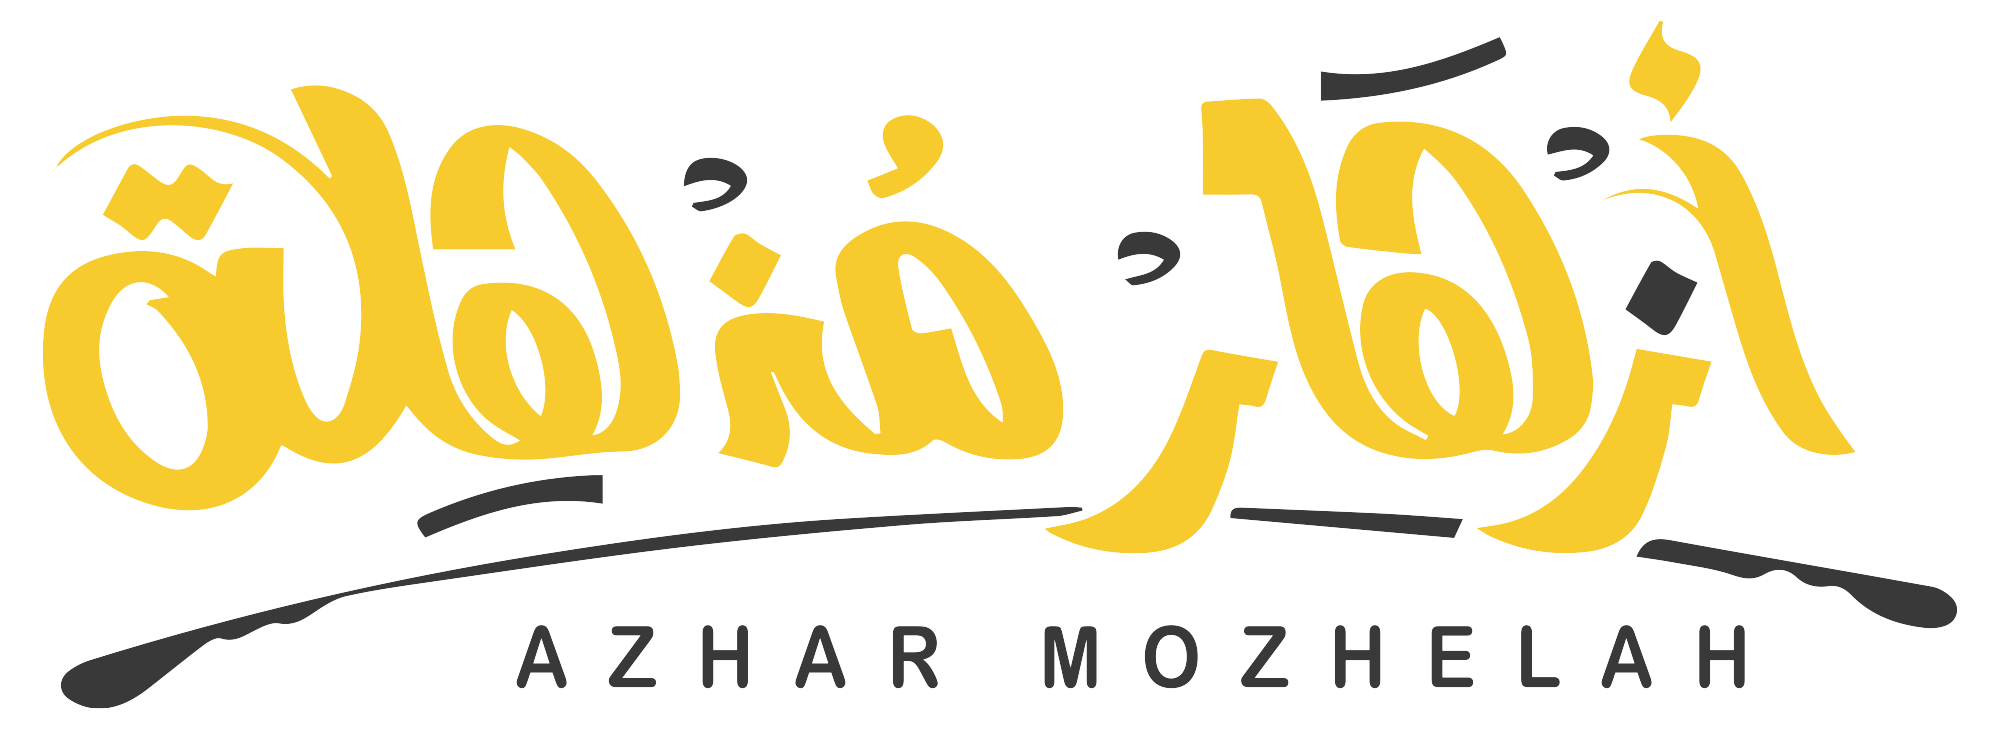 azharmozhela.com